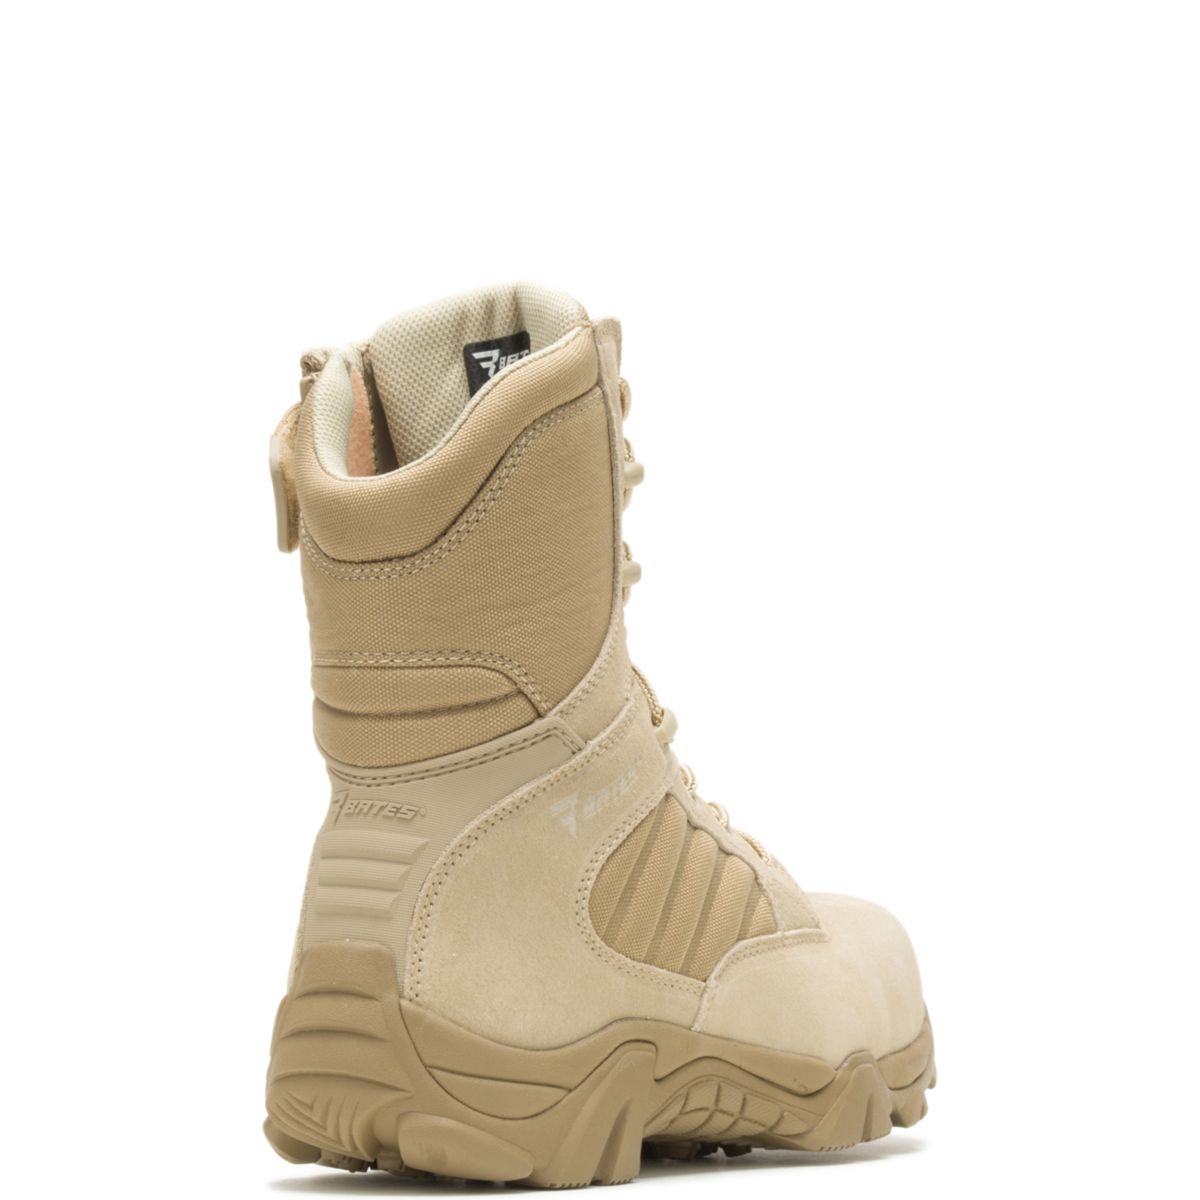 Bates Men's GX-8 Composite Toe Side-Zip Work Boot Desert Tan - E02276 - image 4 of 6